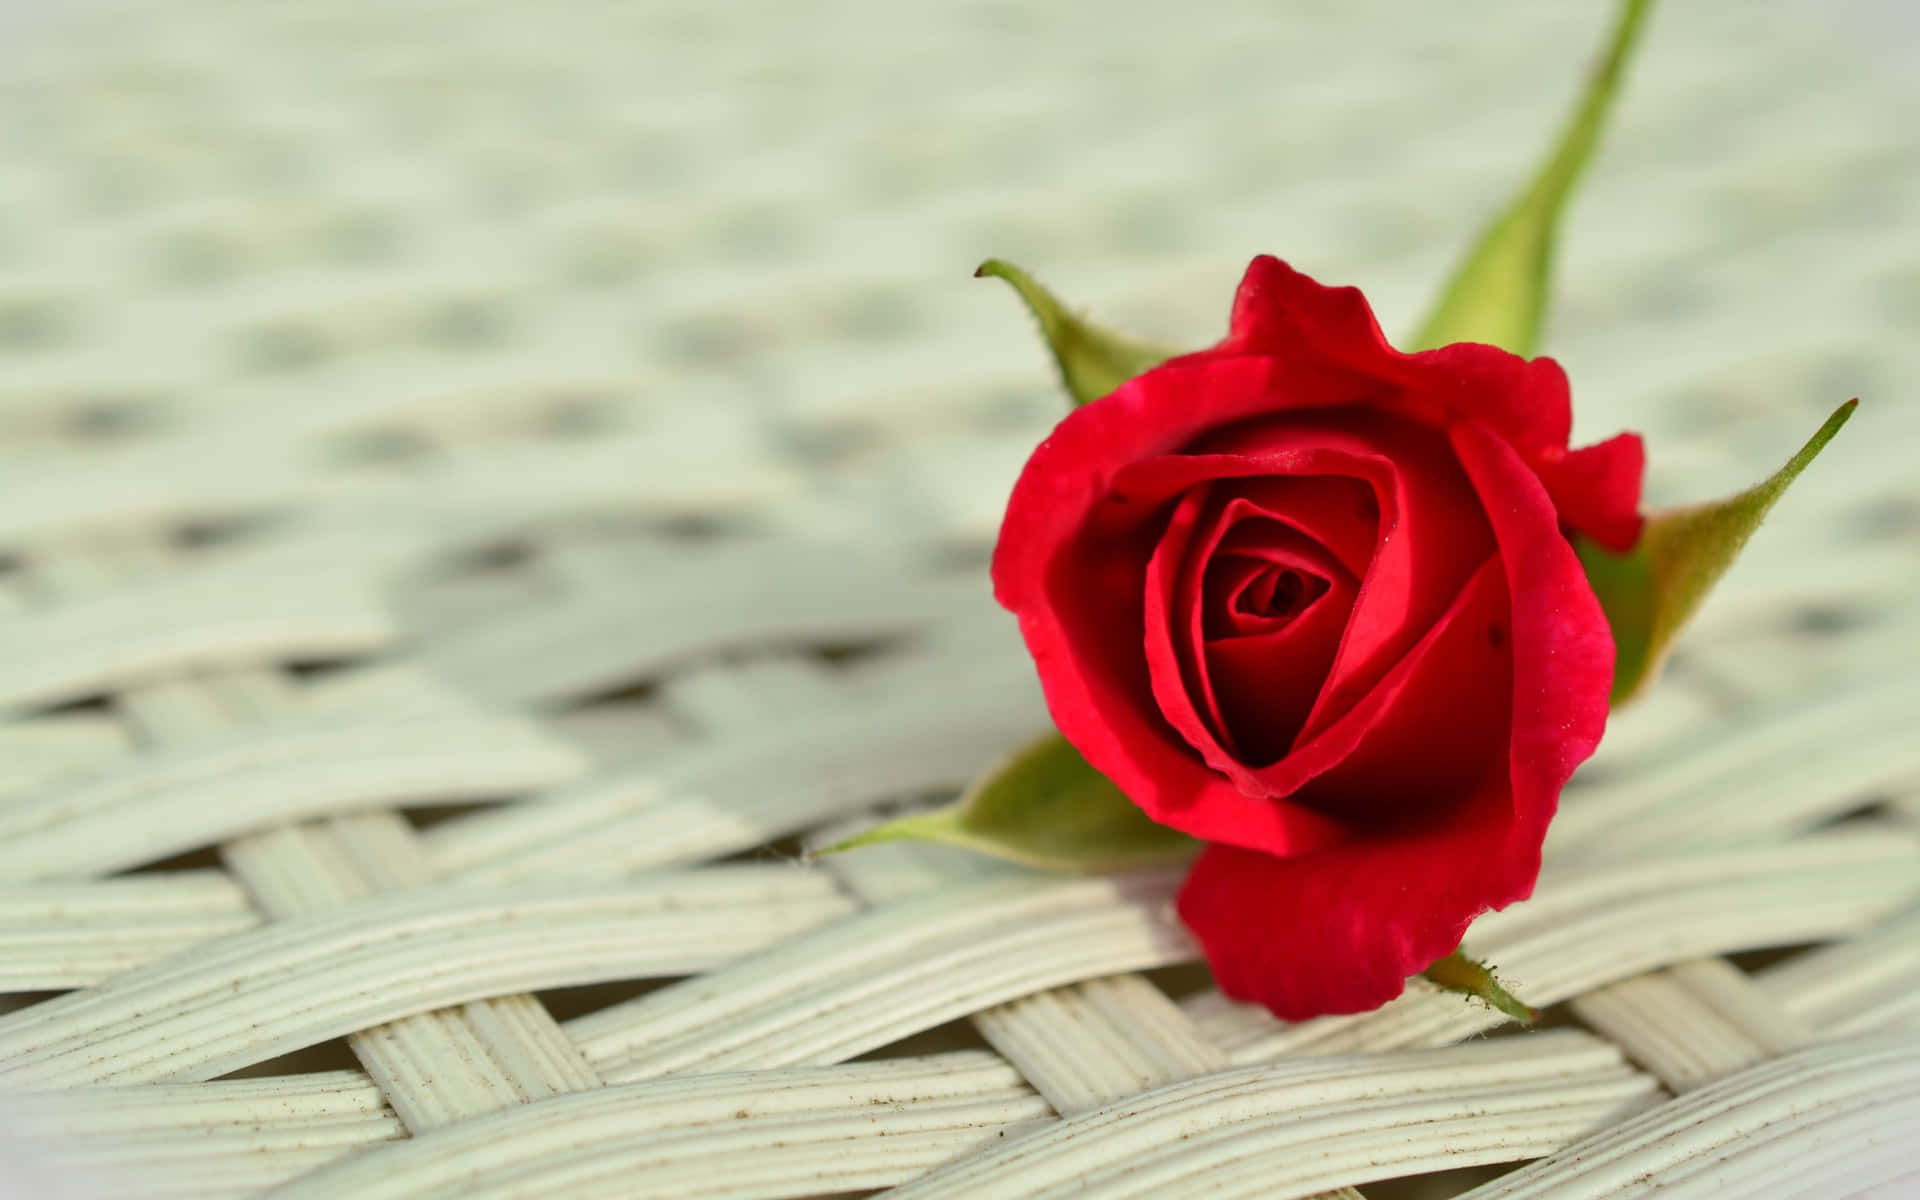 A Red Rose - A Symbol of Love